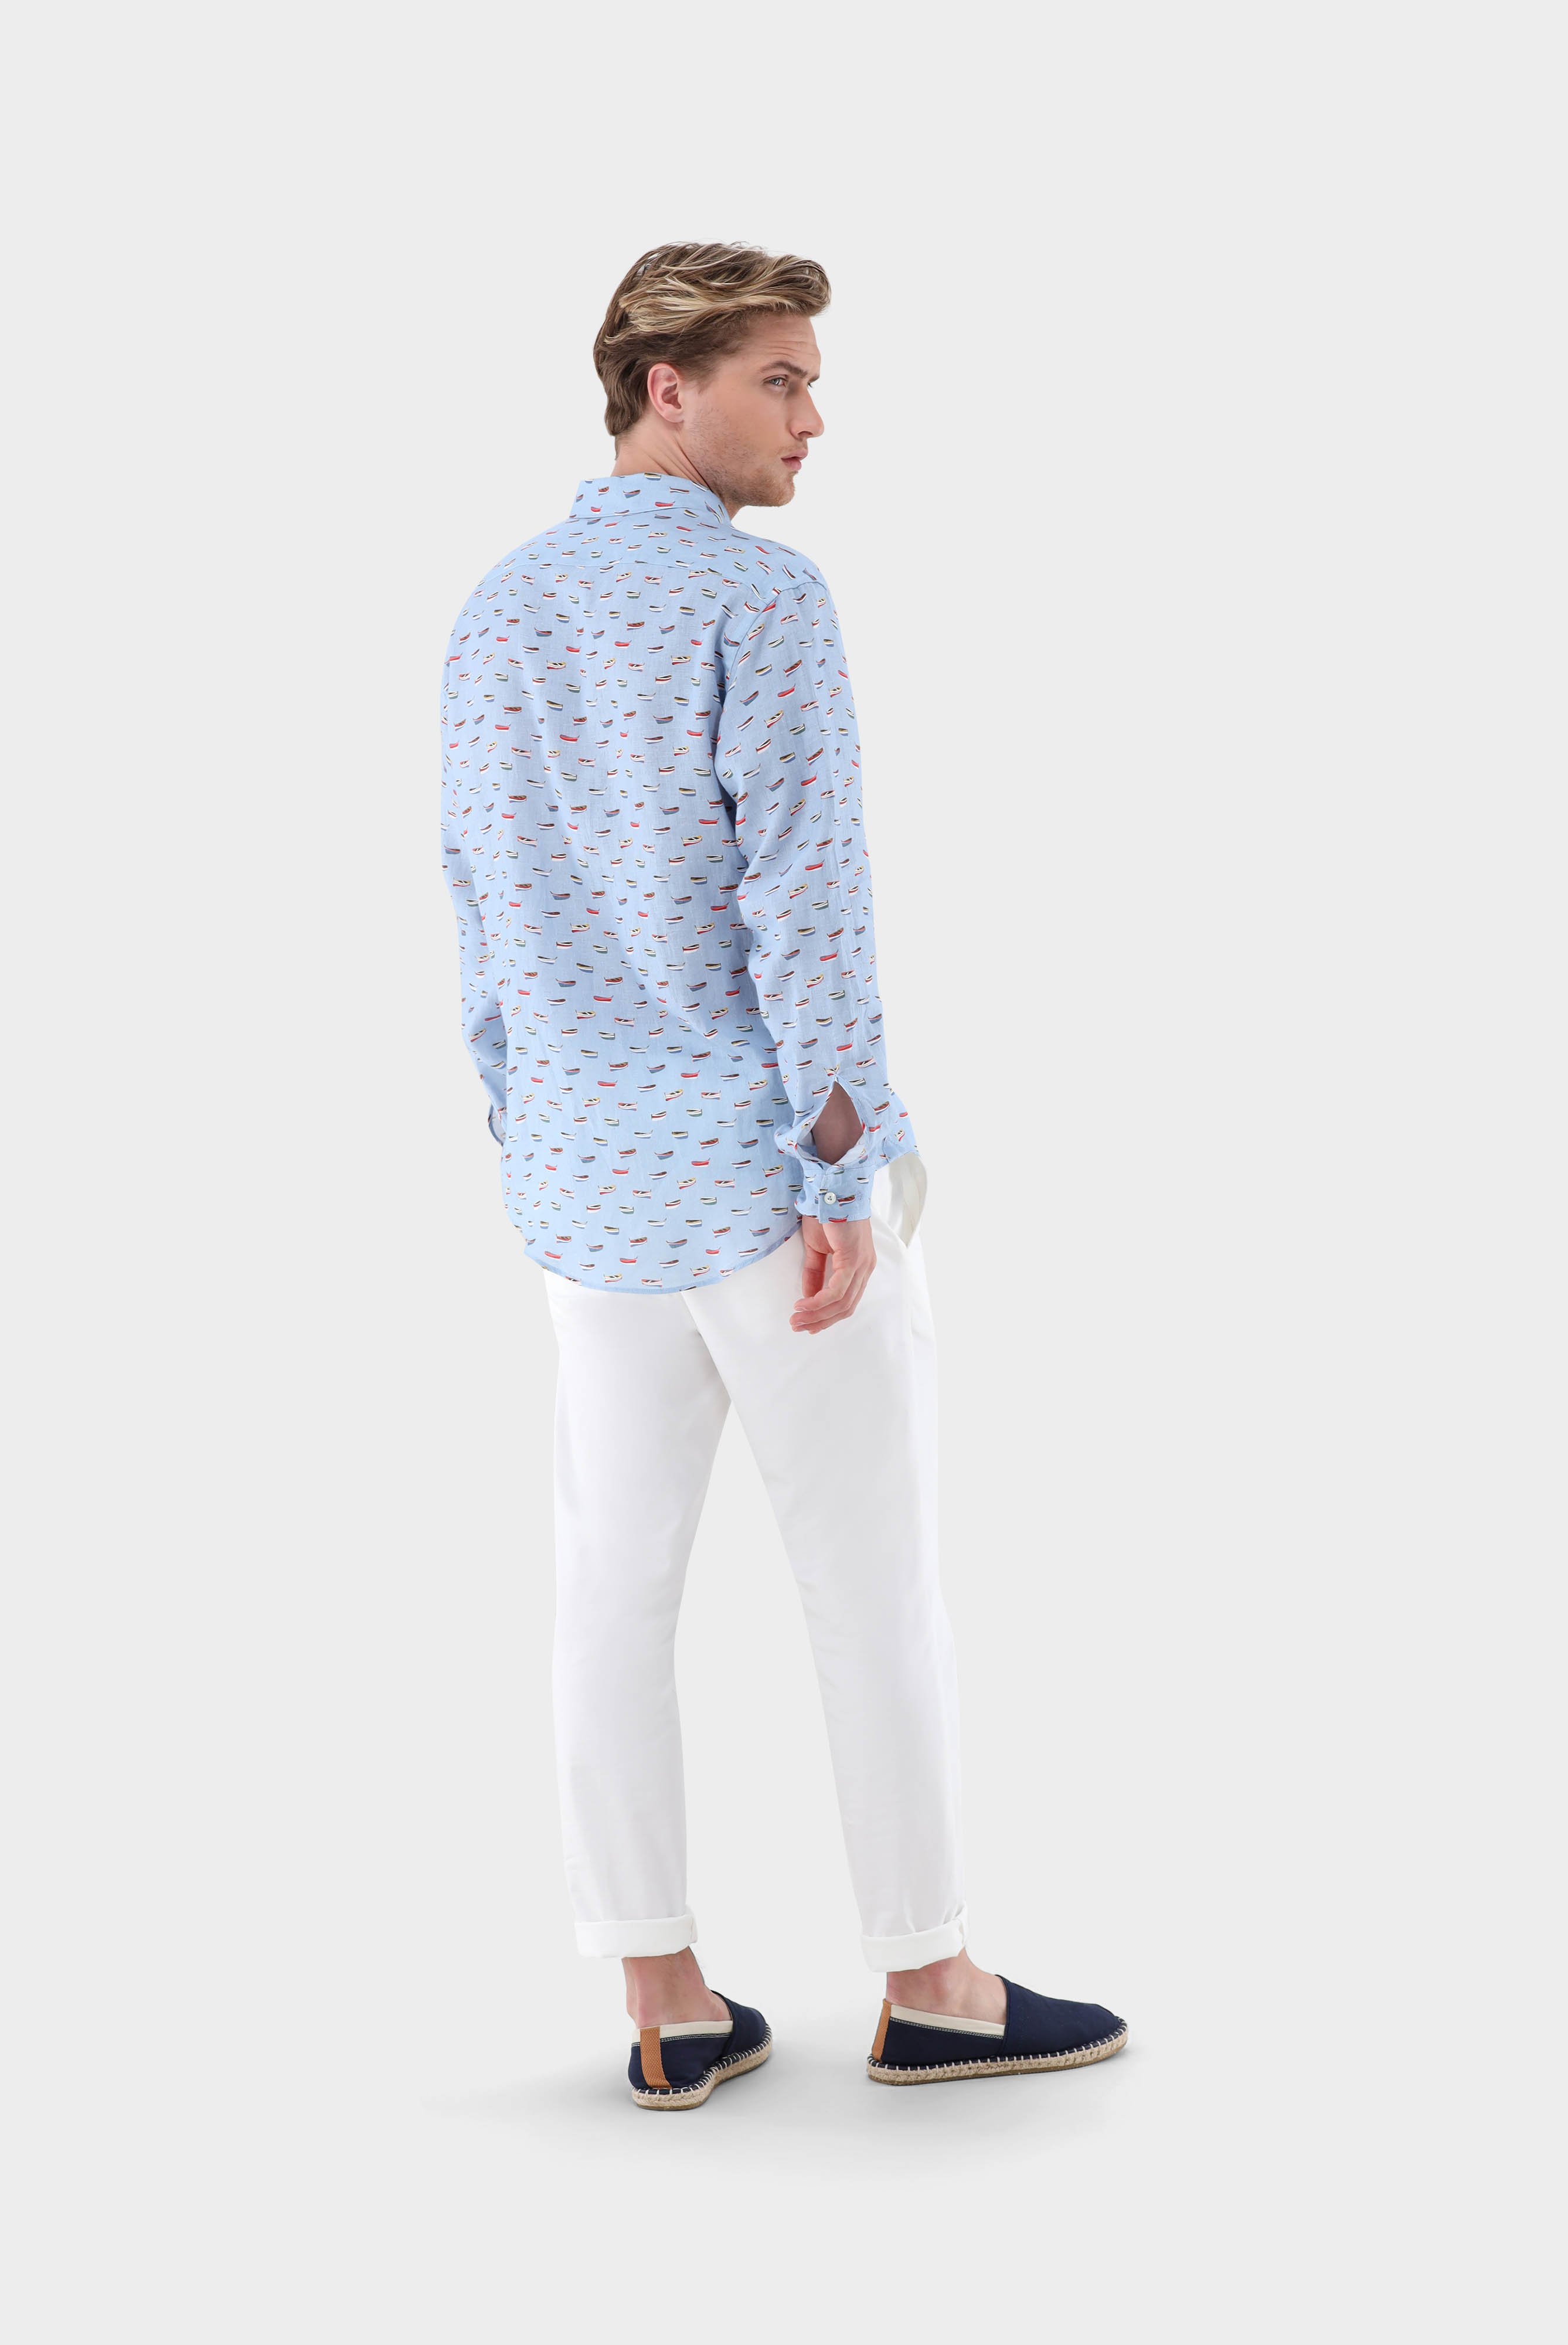 Casual Shirts+Linen Shirt with Boat Print+20.2020.9V.170348.730.39